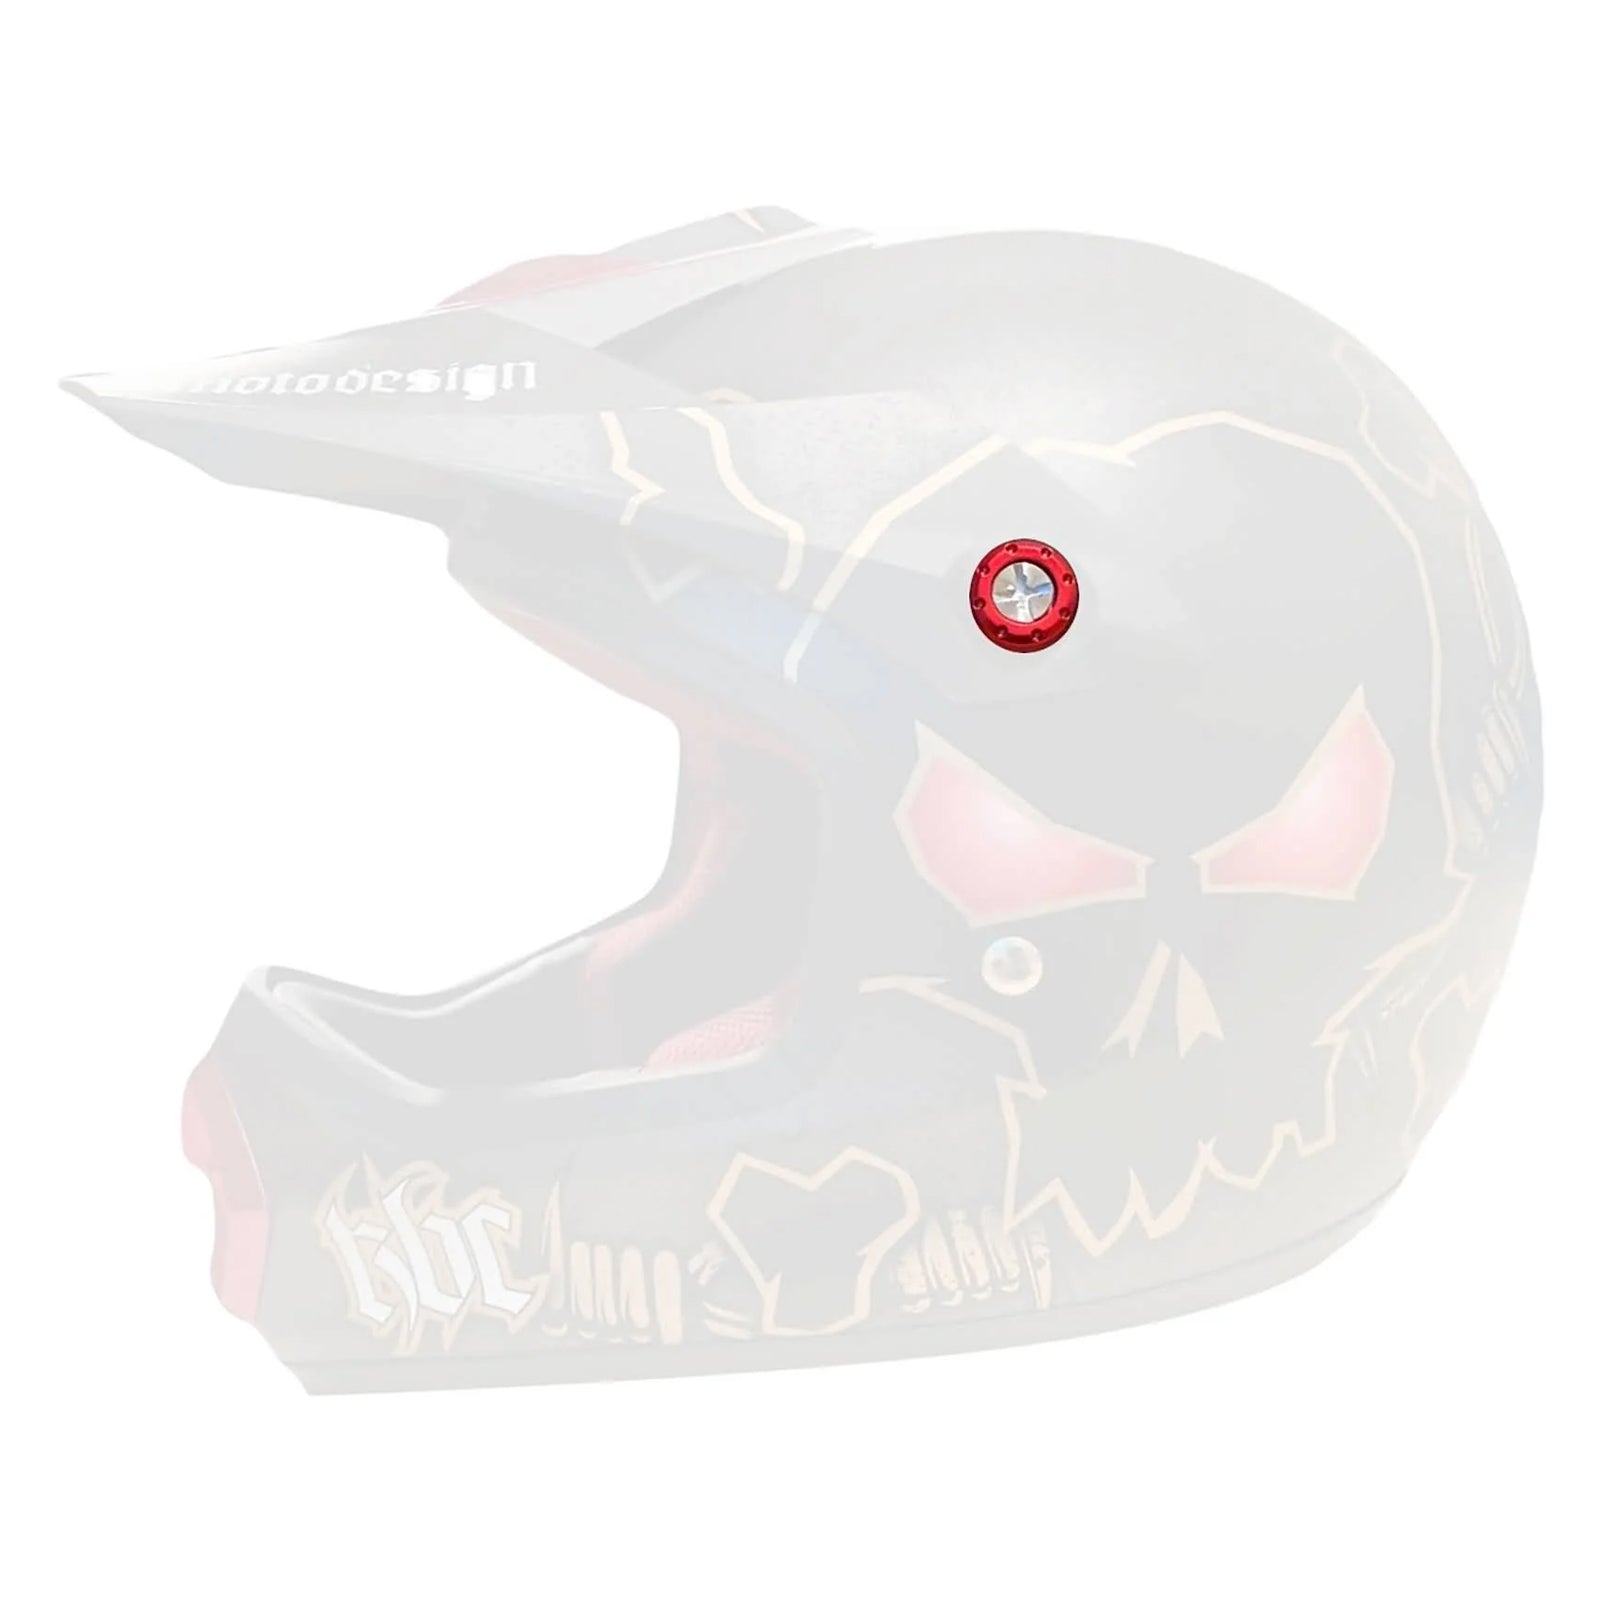 KBC Moto-X6 Spec Screw Set Helmet Accessories